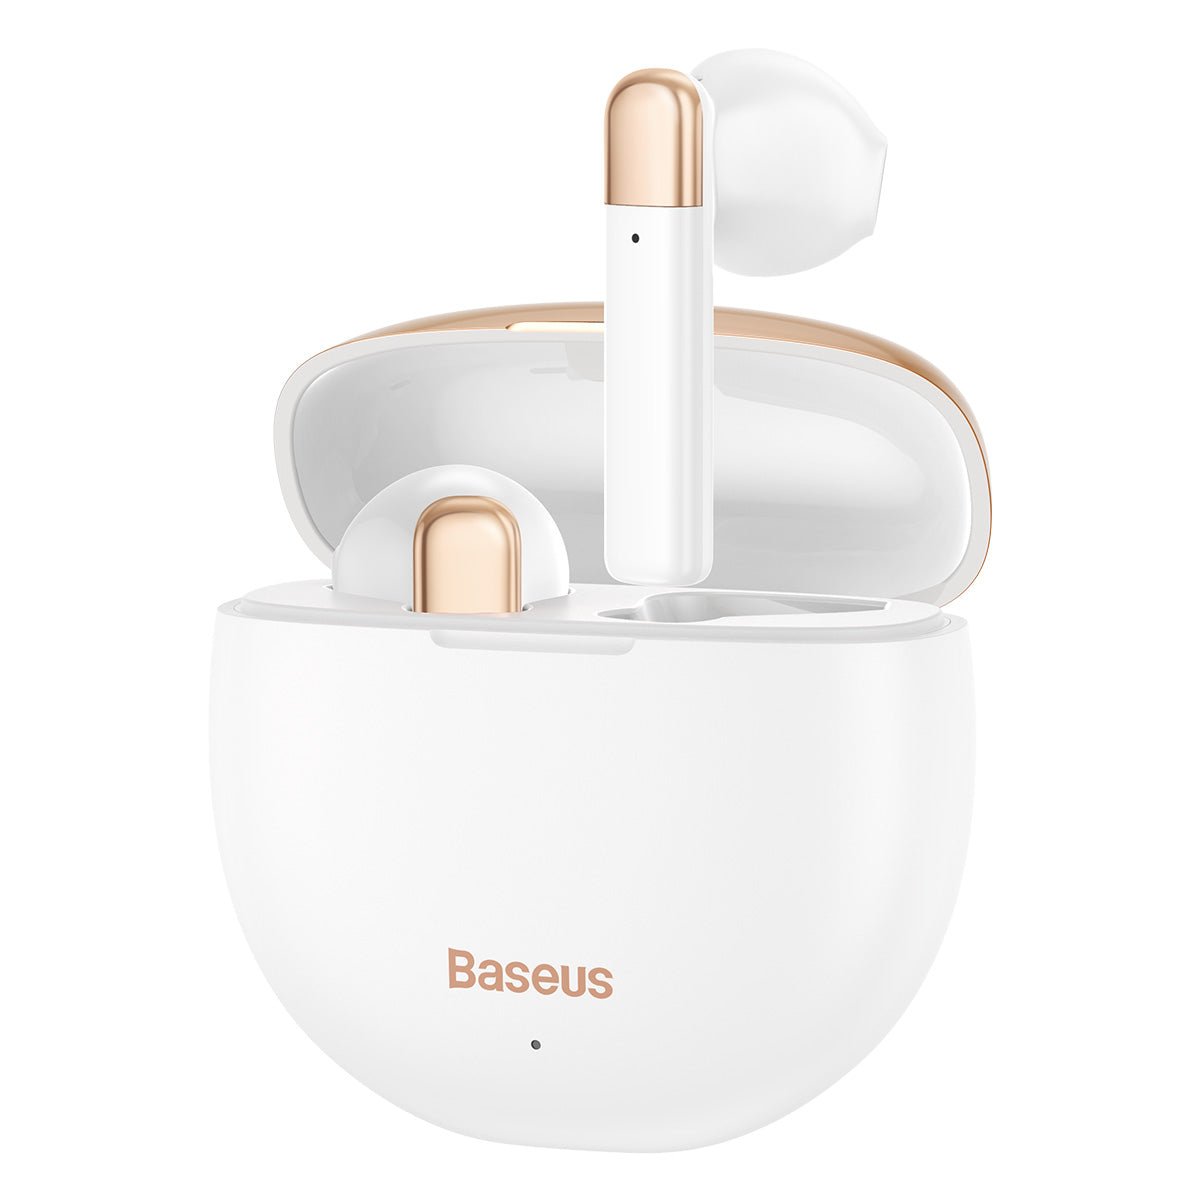 Baseus AirNora Encok True Wireless Earphones - W2